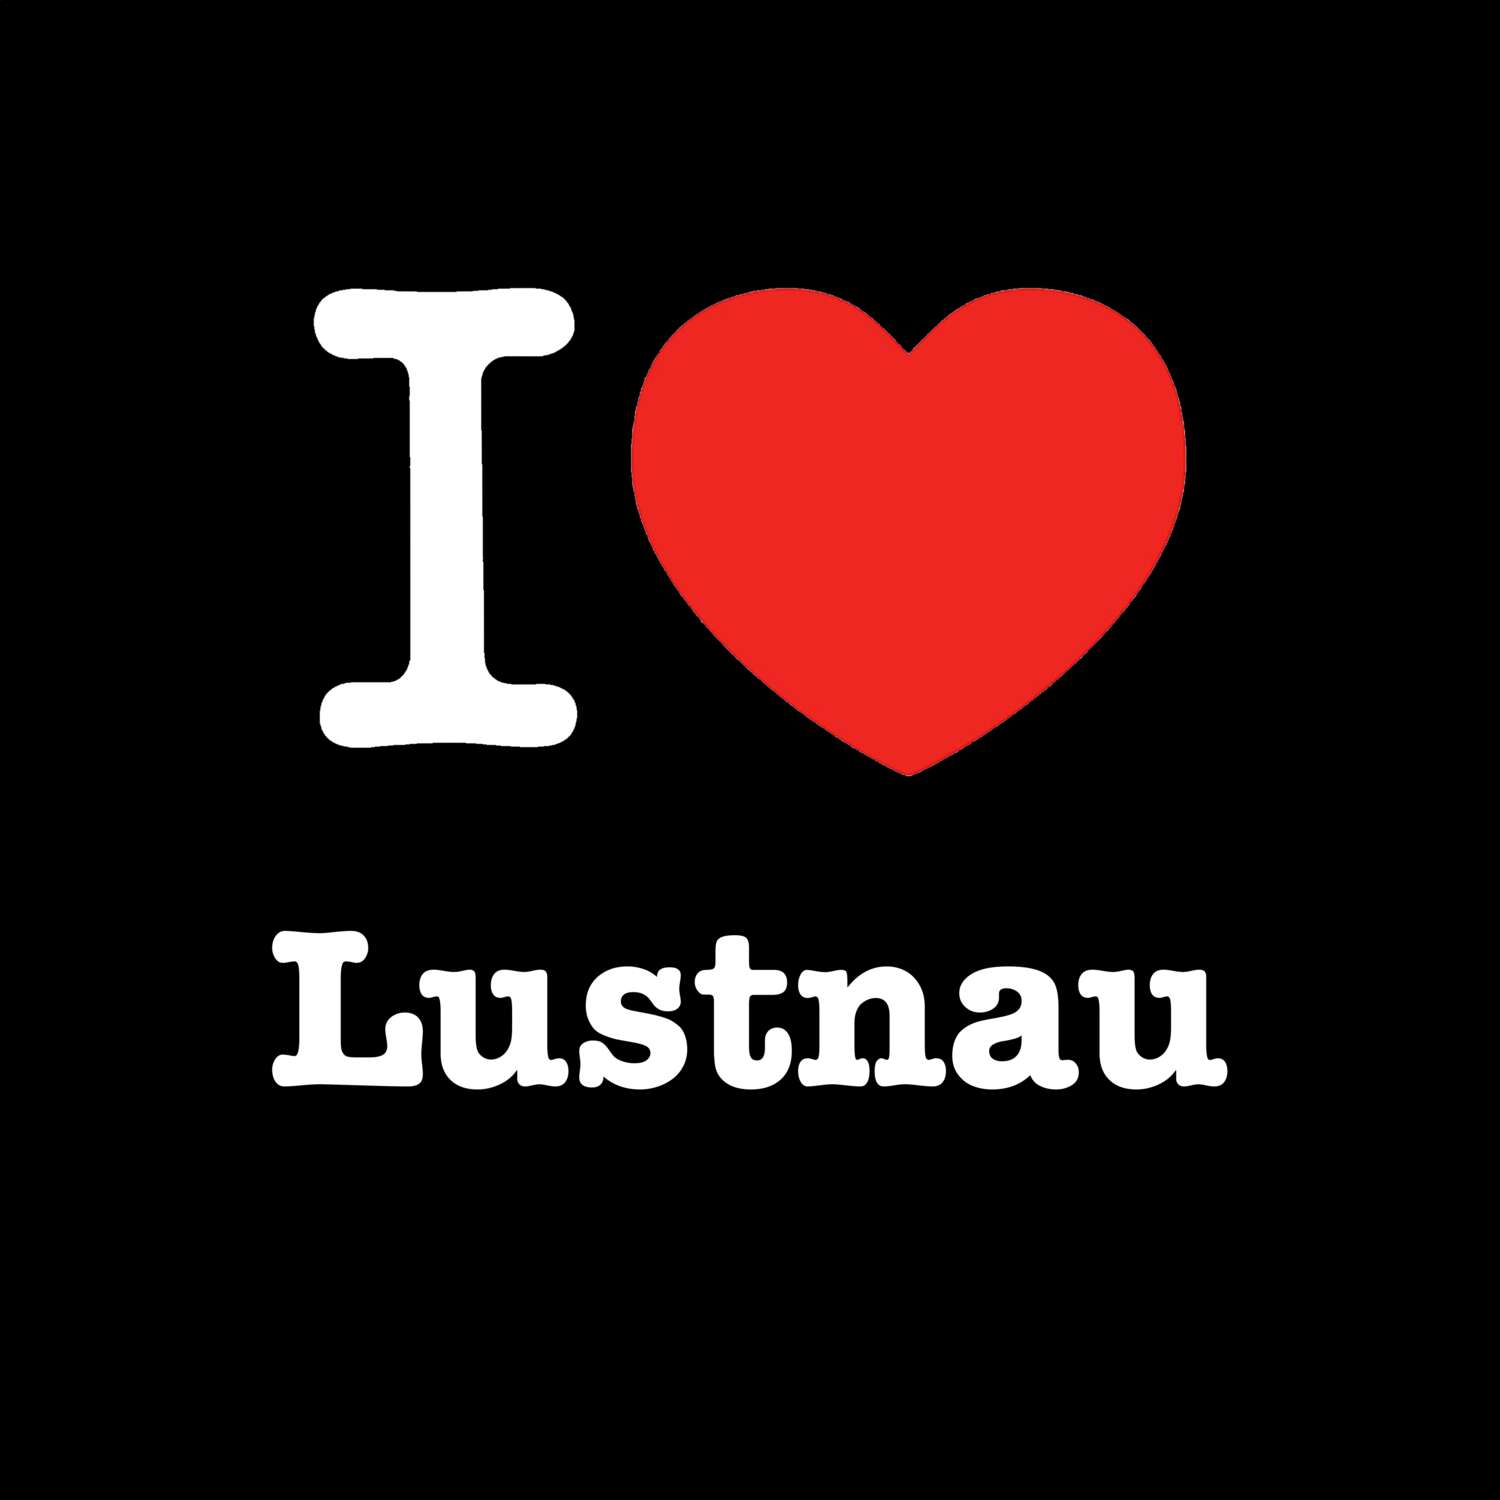 Lustnau T-Shirt »I love«